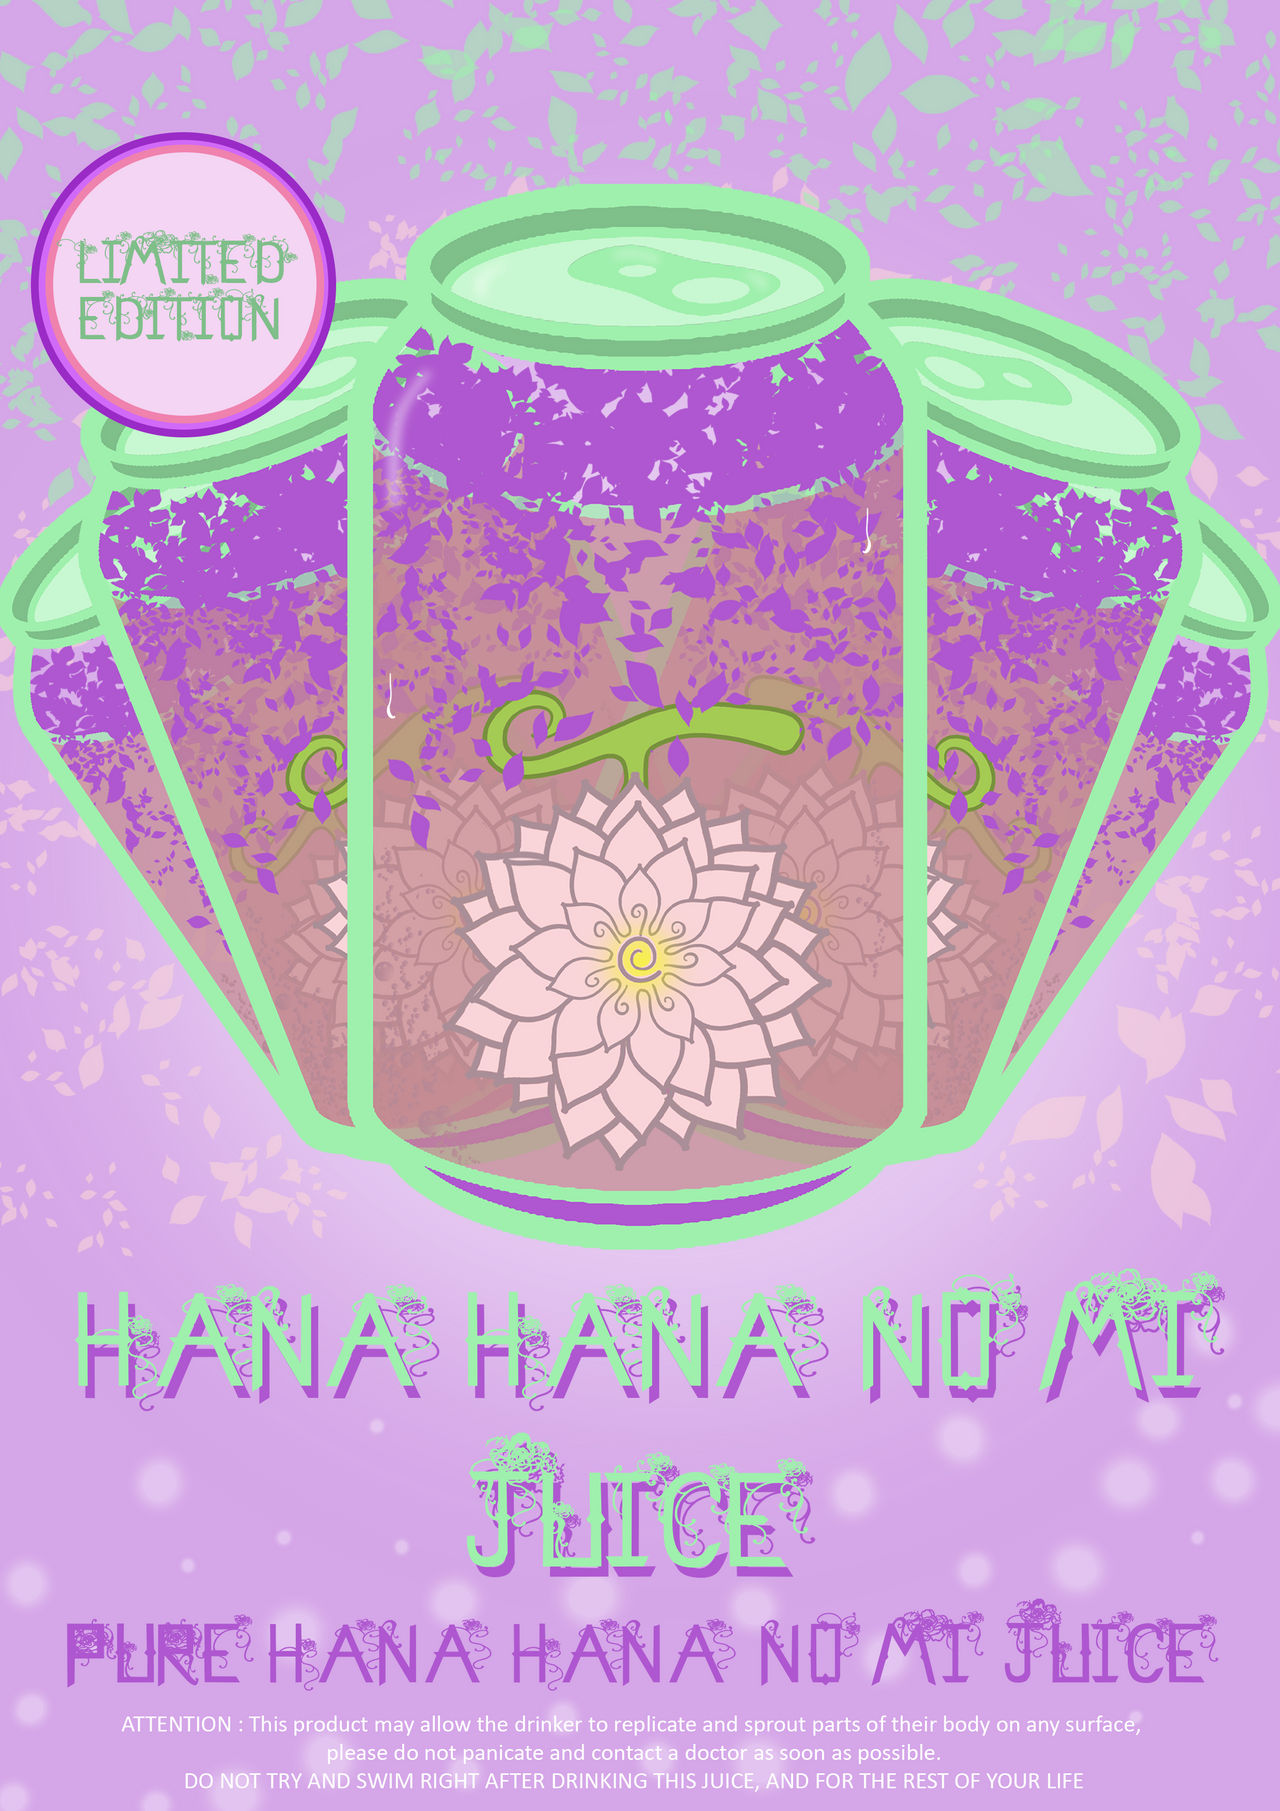 Hana Hana Juice by Bumblebeesz on DeviantArt